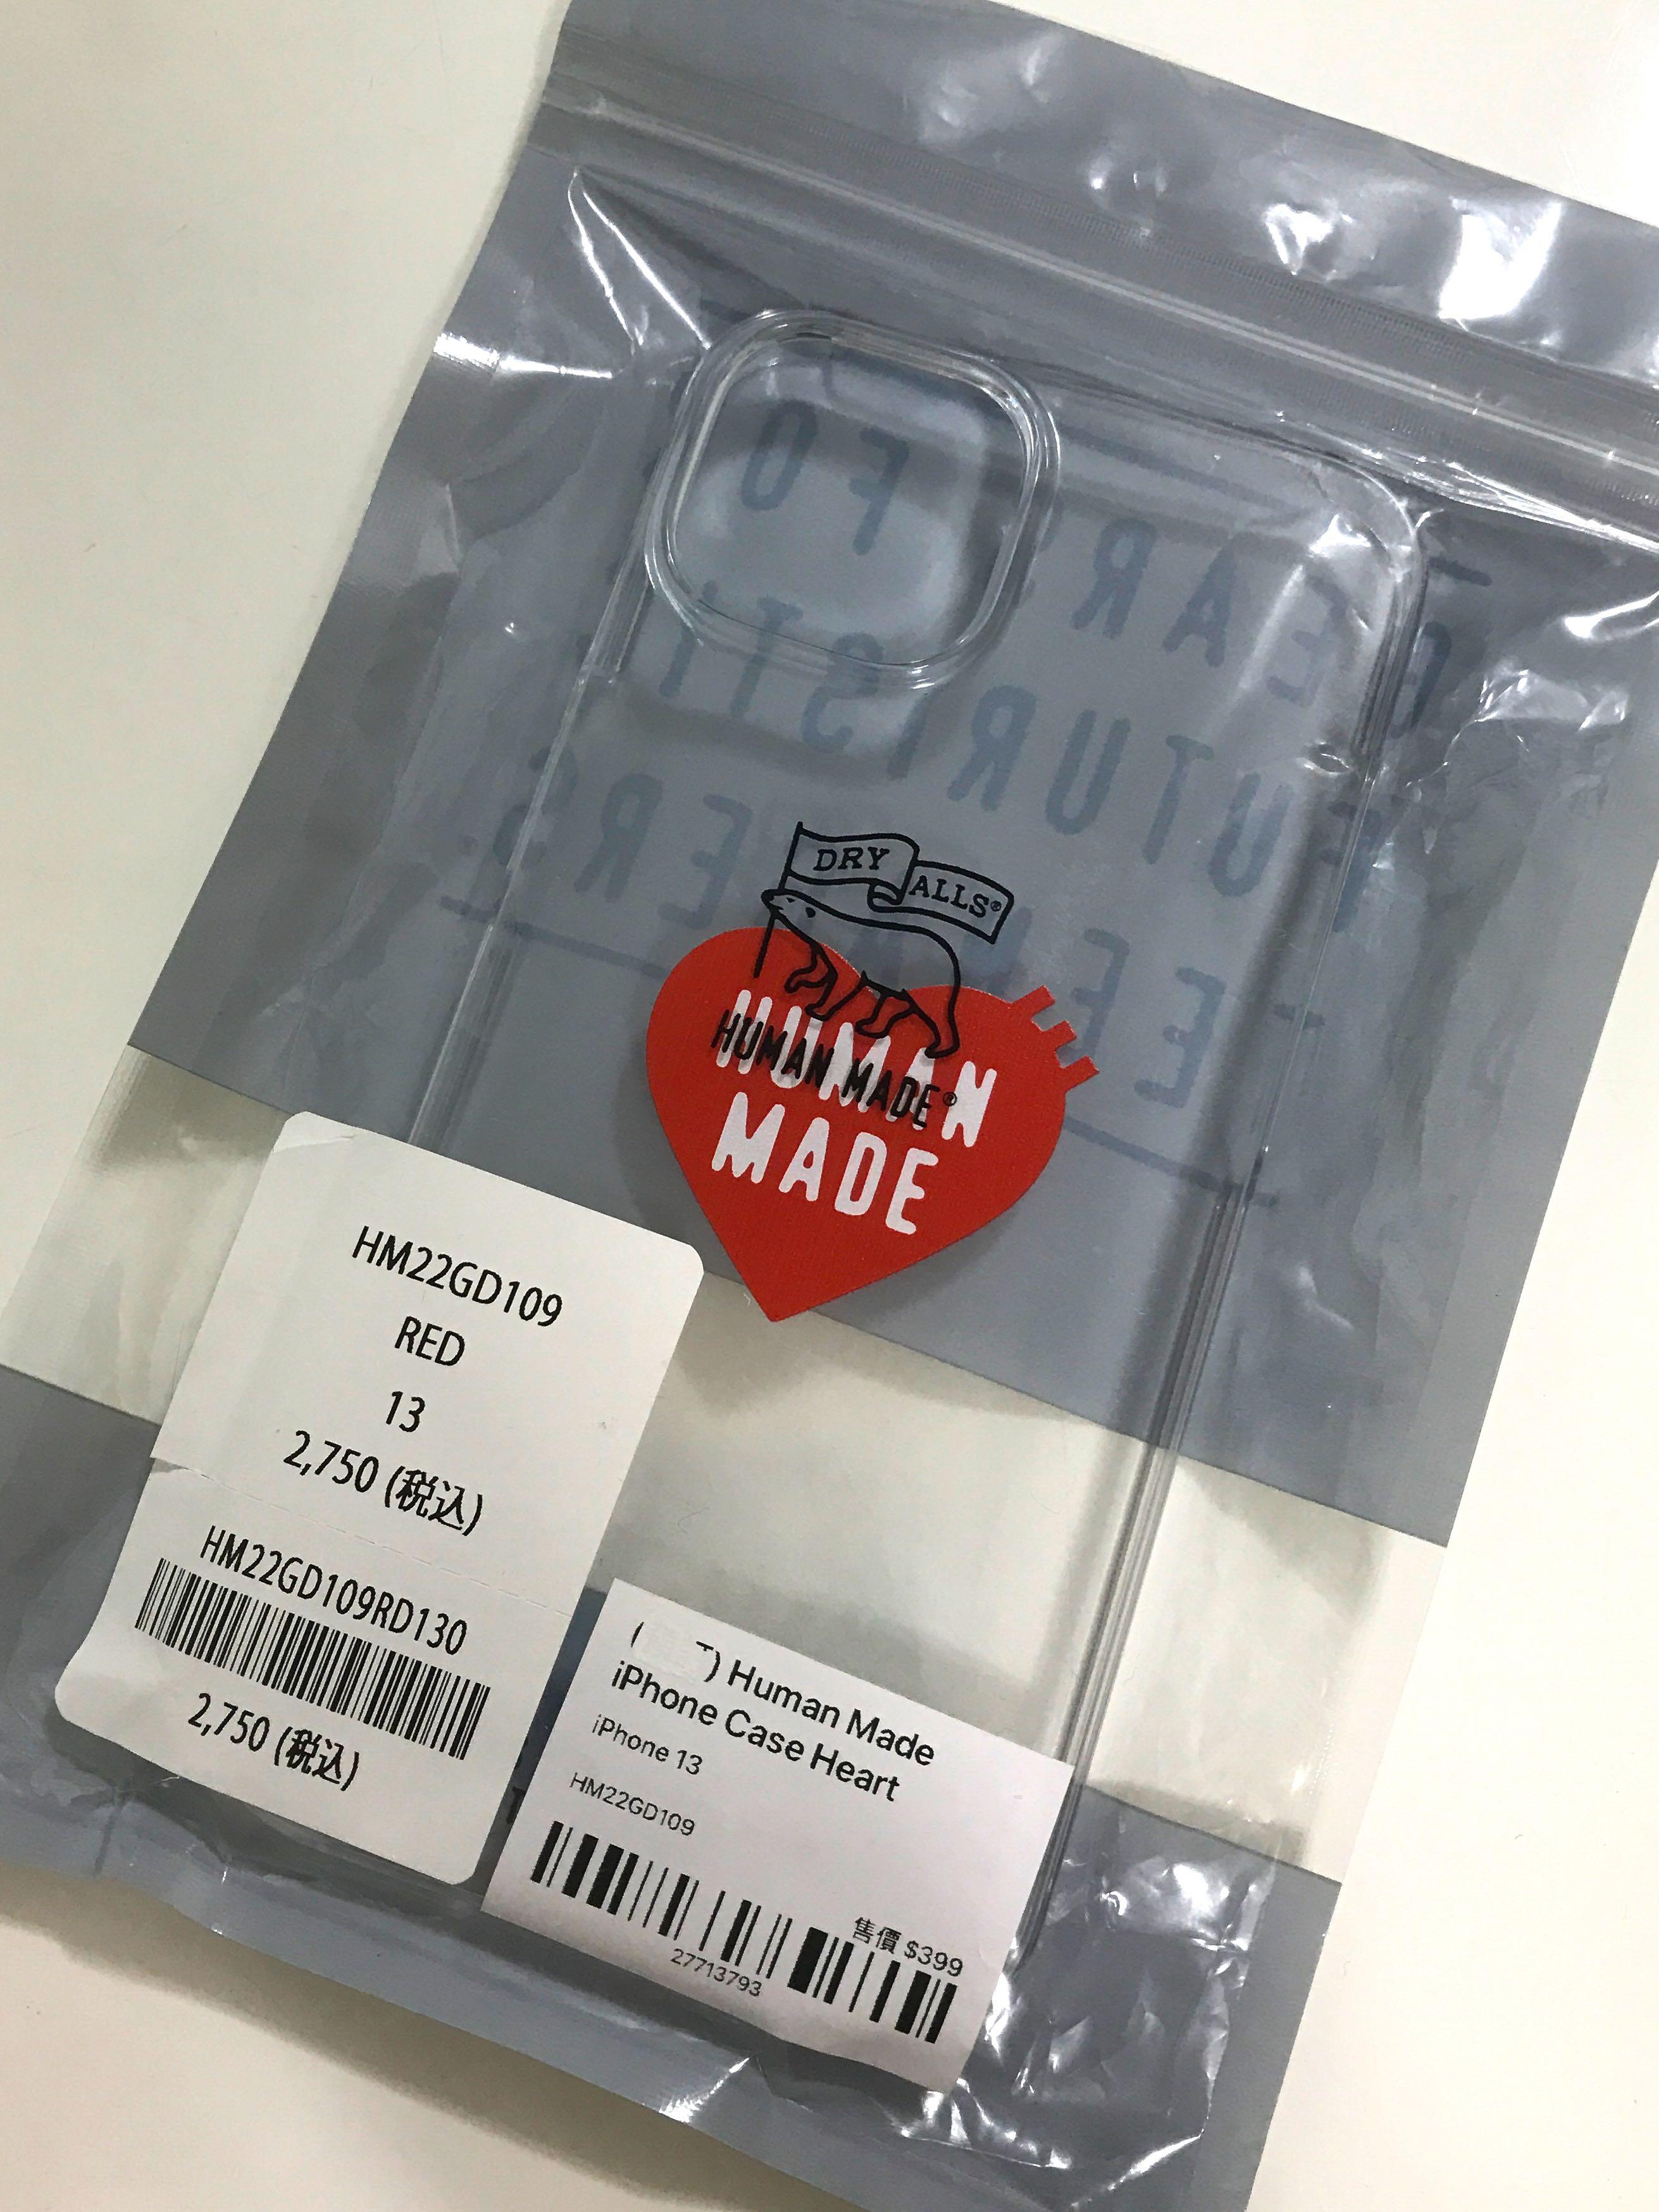 全新New! Human Made Red Heart iPhone 13 Case, 手提電話, 電話及其他